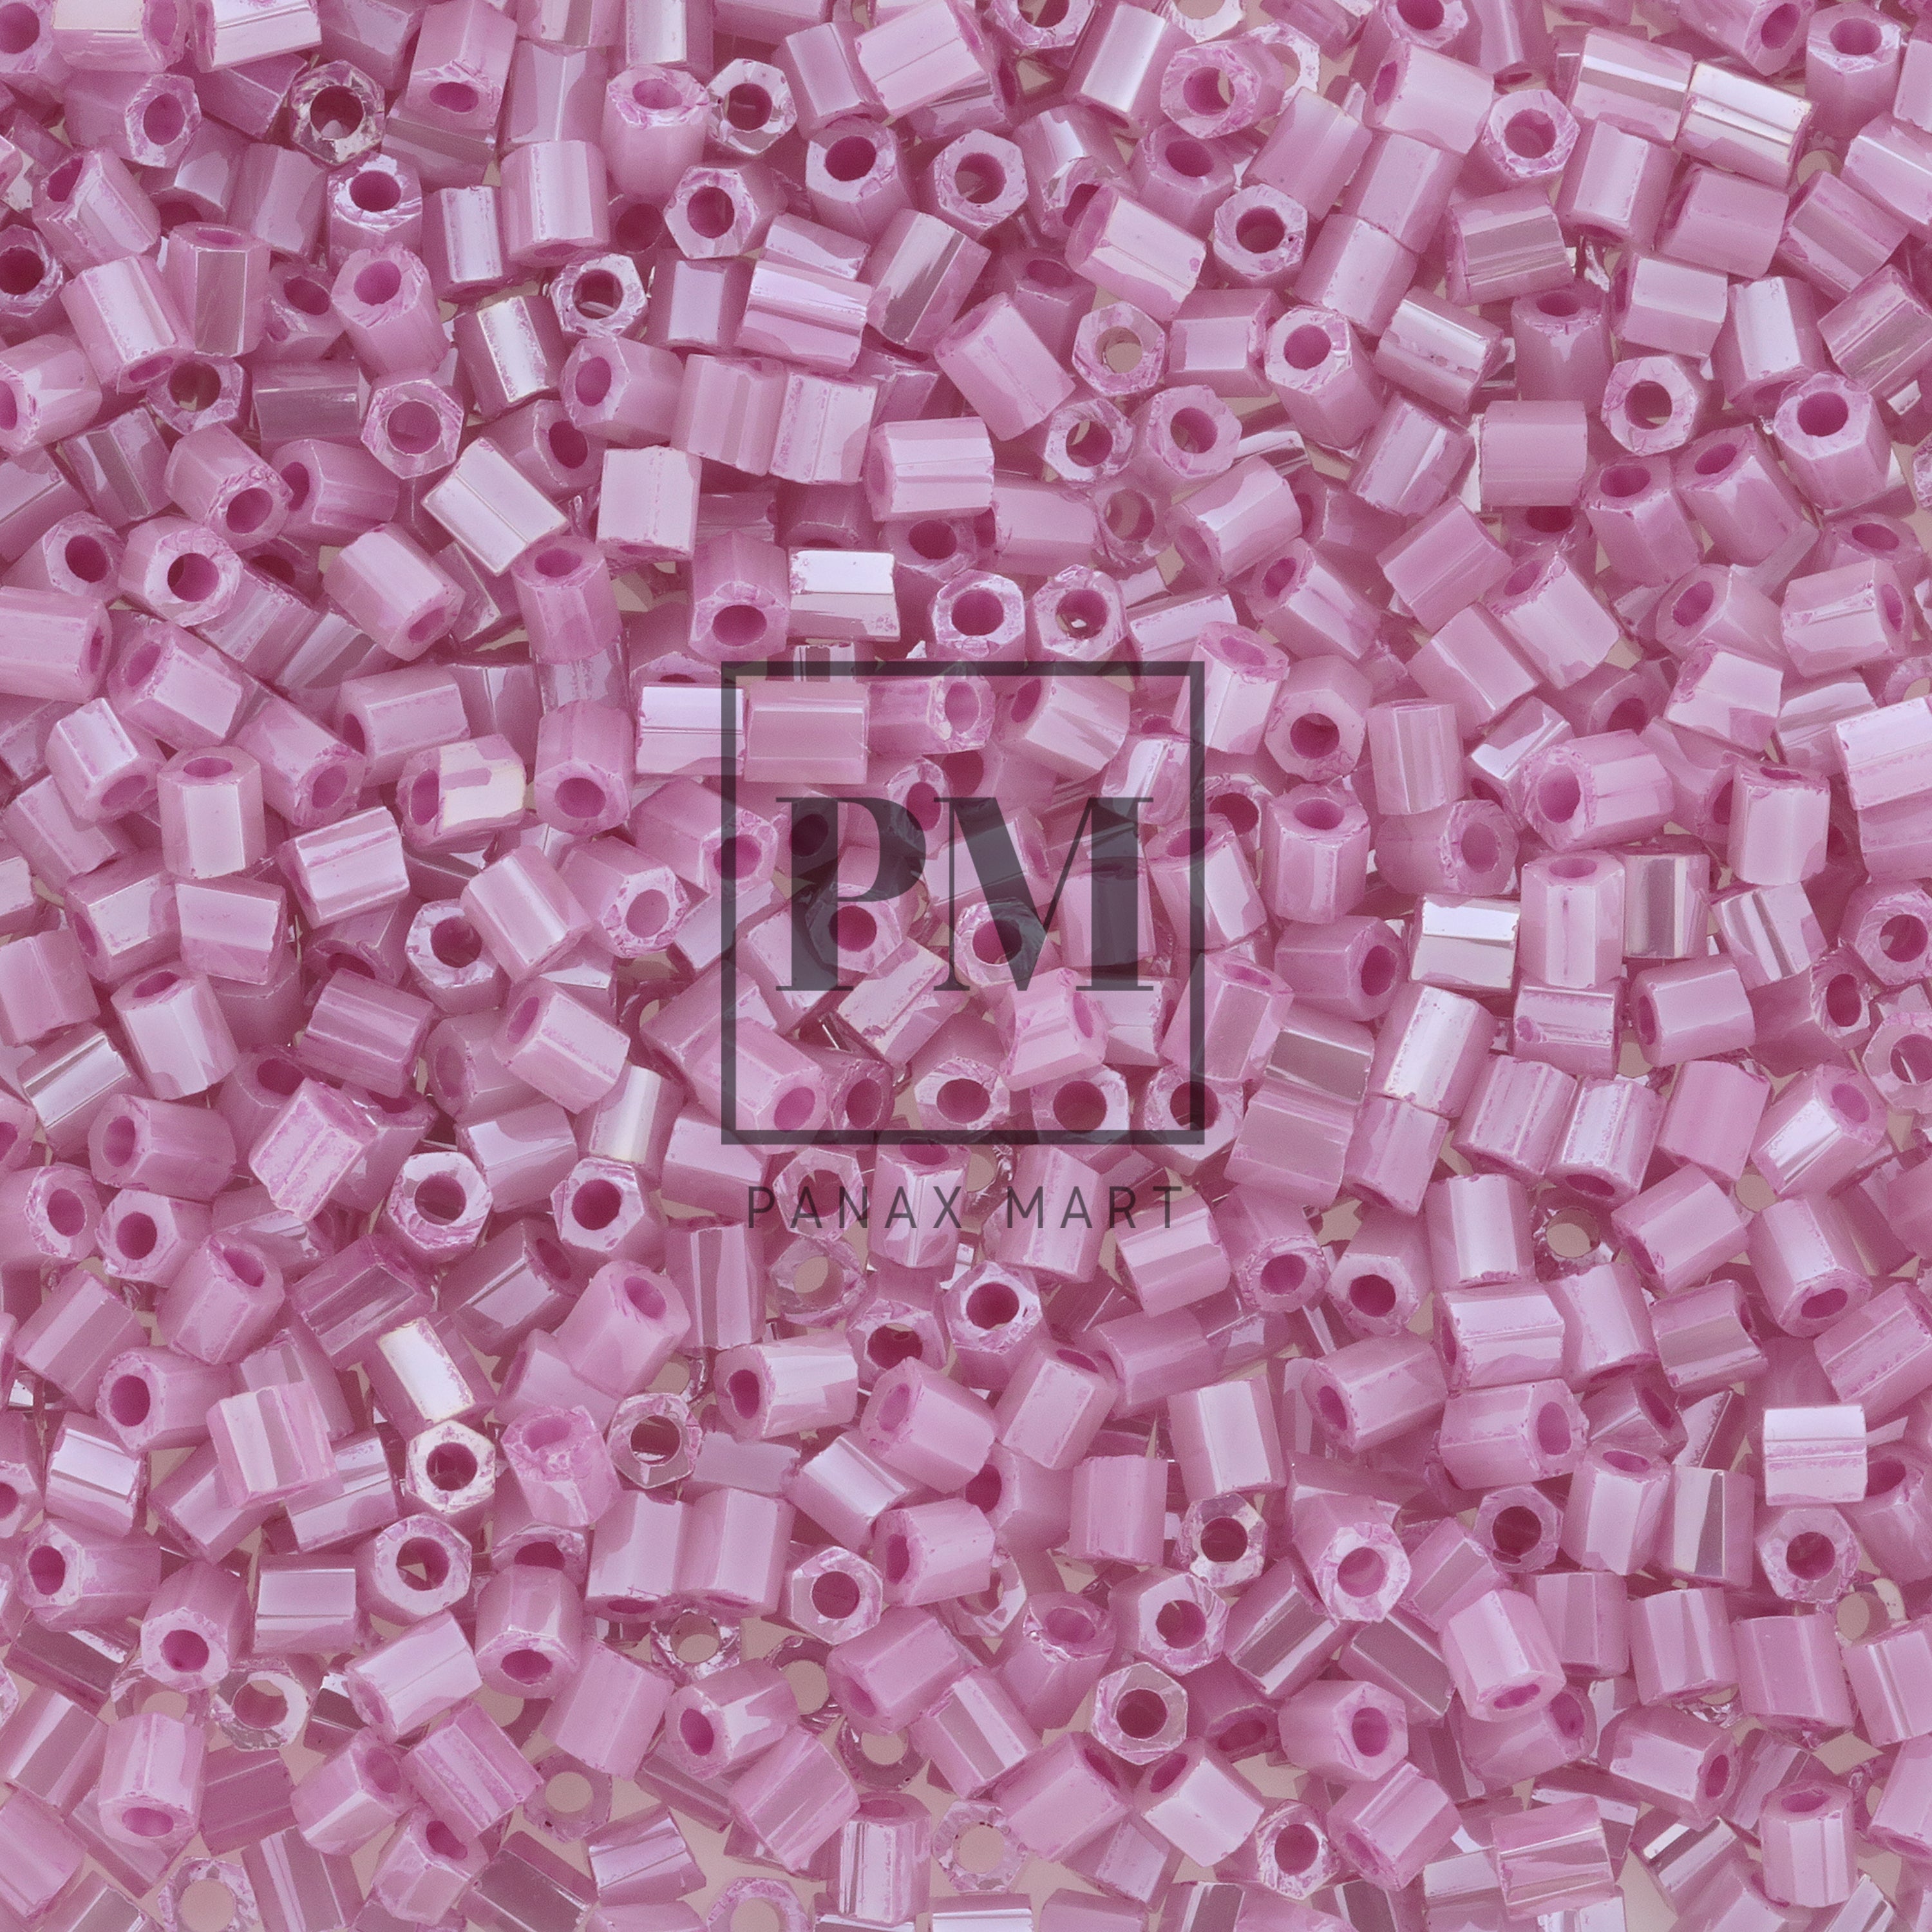 Matsuno Glass Beads (MGB) 11/0 2 CUT 382 - Panax Mart